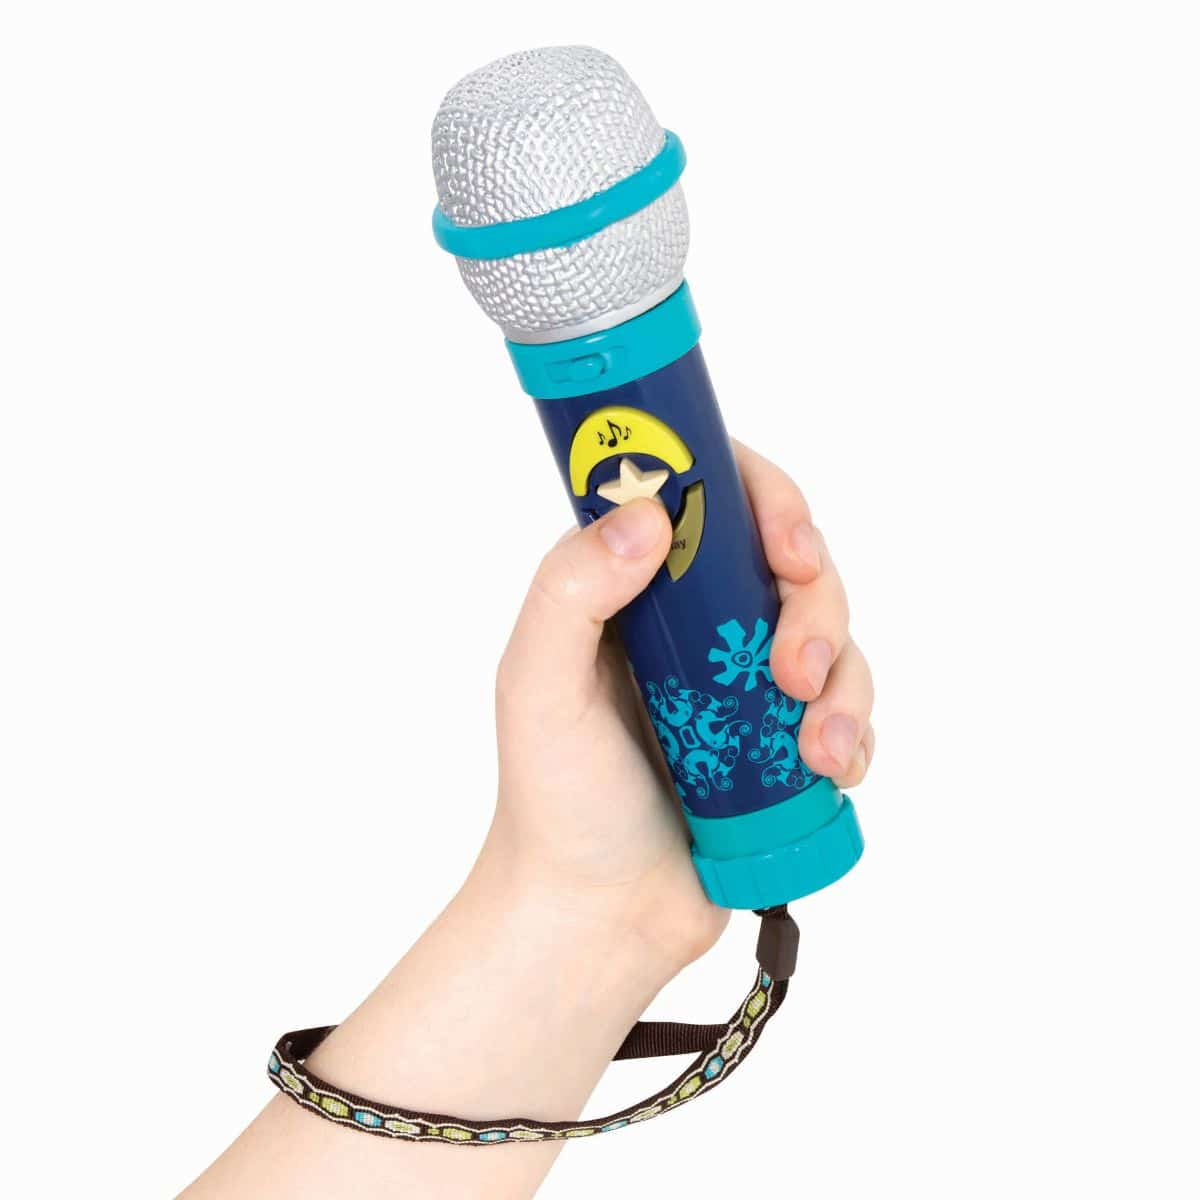 Okideoke Microphone B 